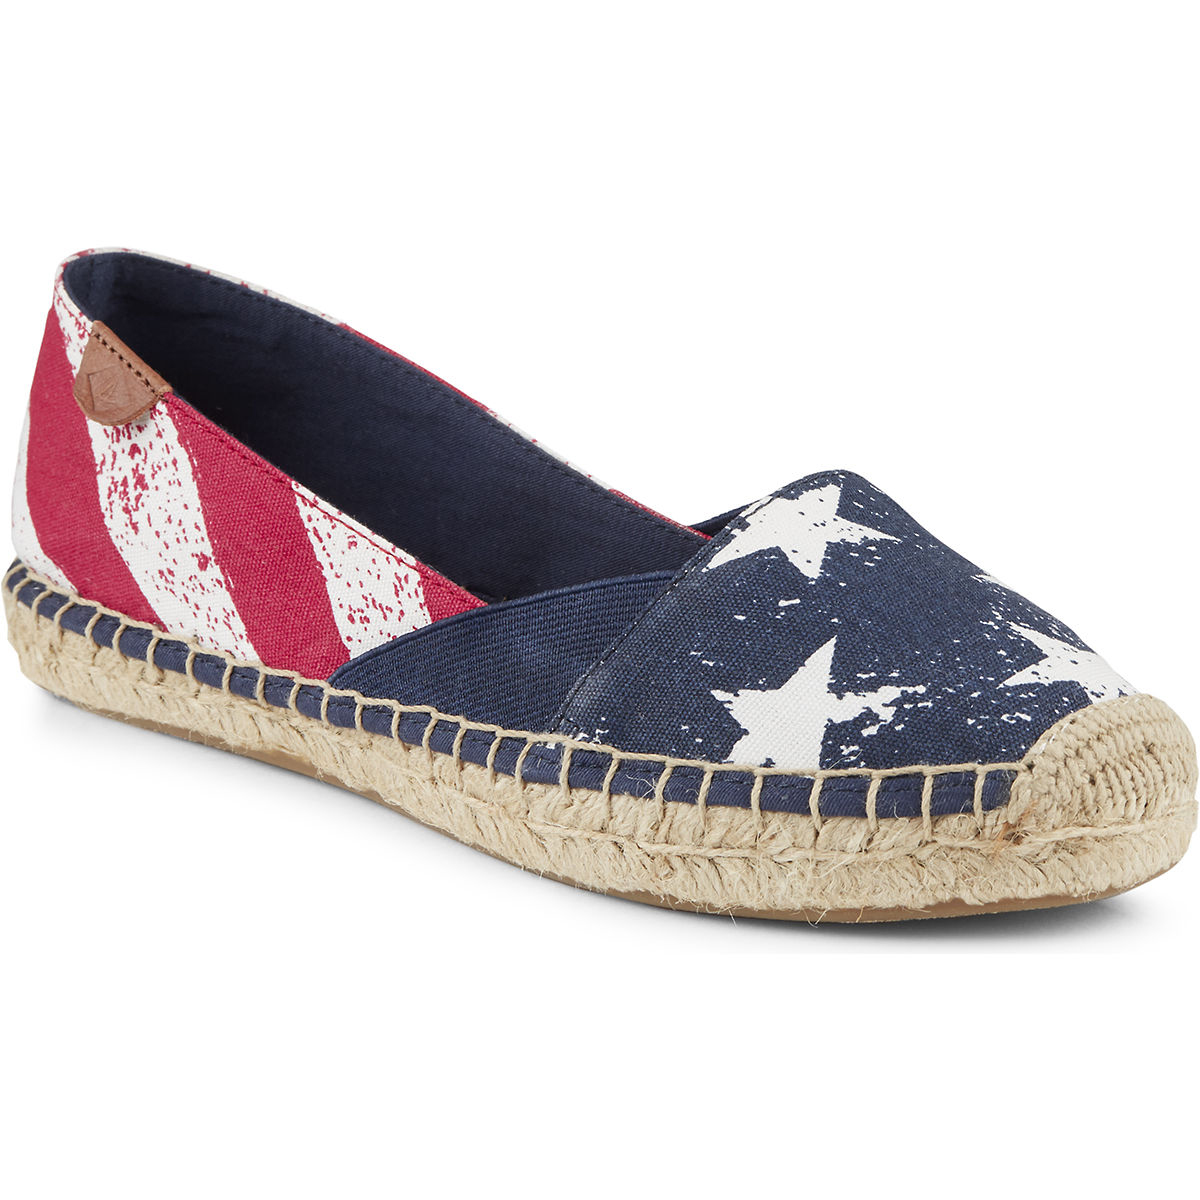 Sperry Cape Stars and Stripes女士漁夫鞋  特價僅售$29.99